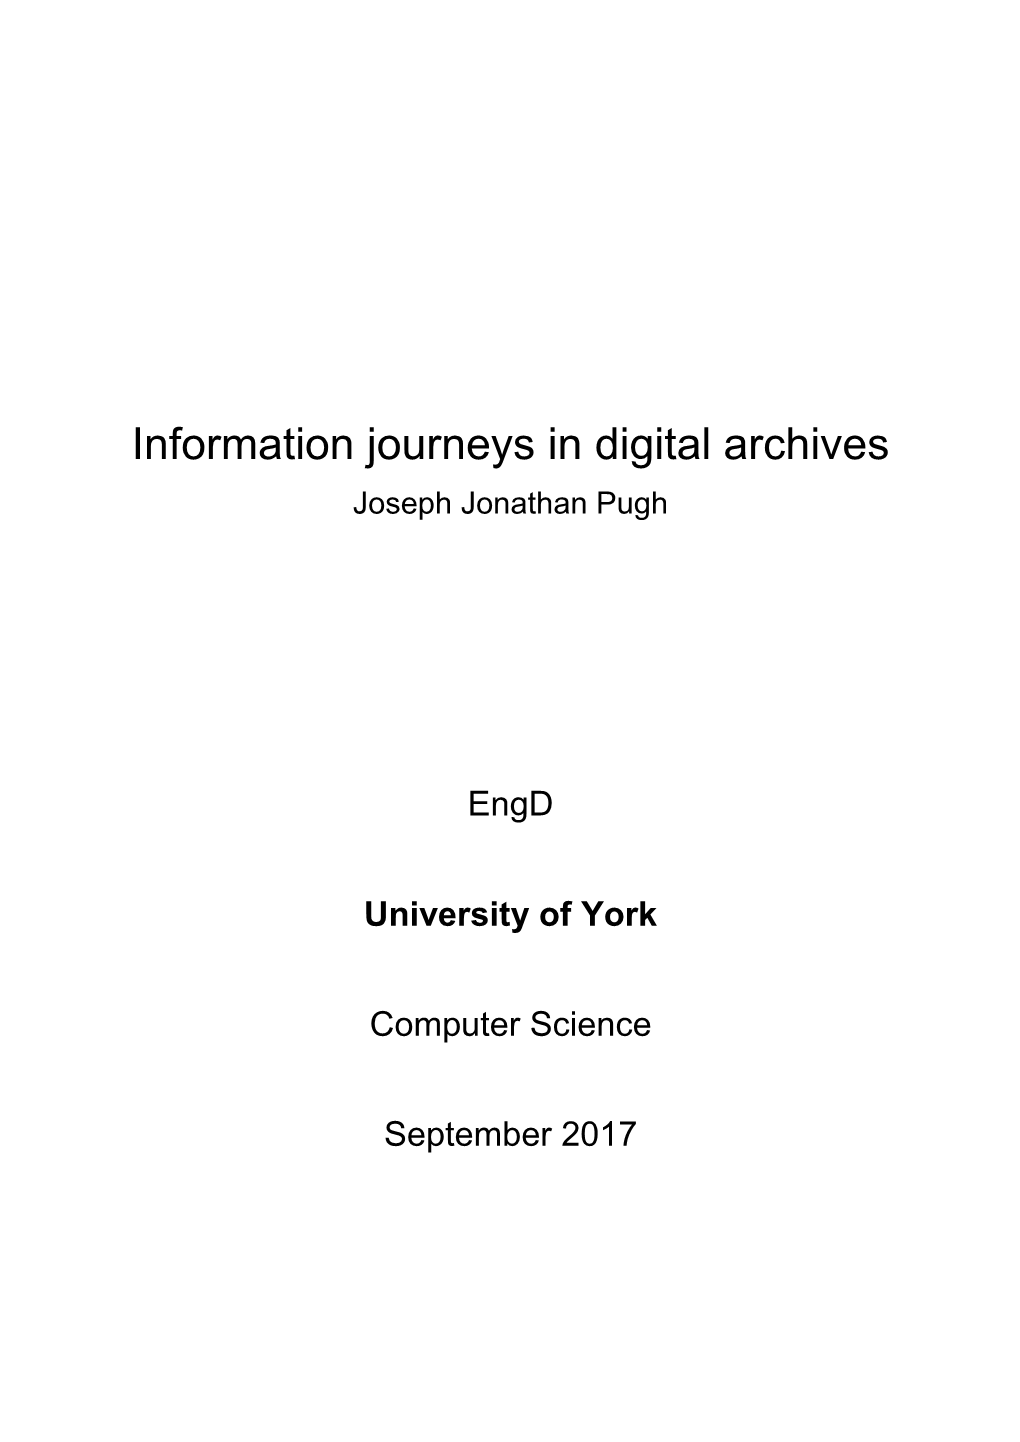 Information Journeys in Digital Archives Joseph Jonathan Pugh